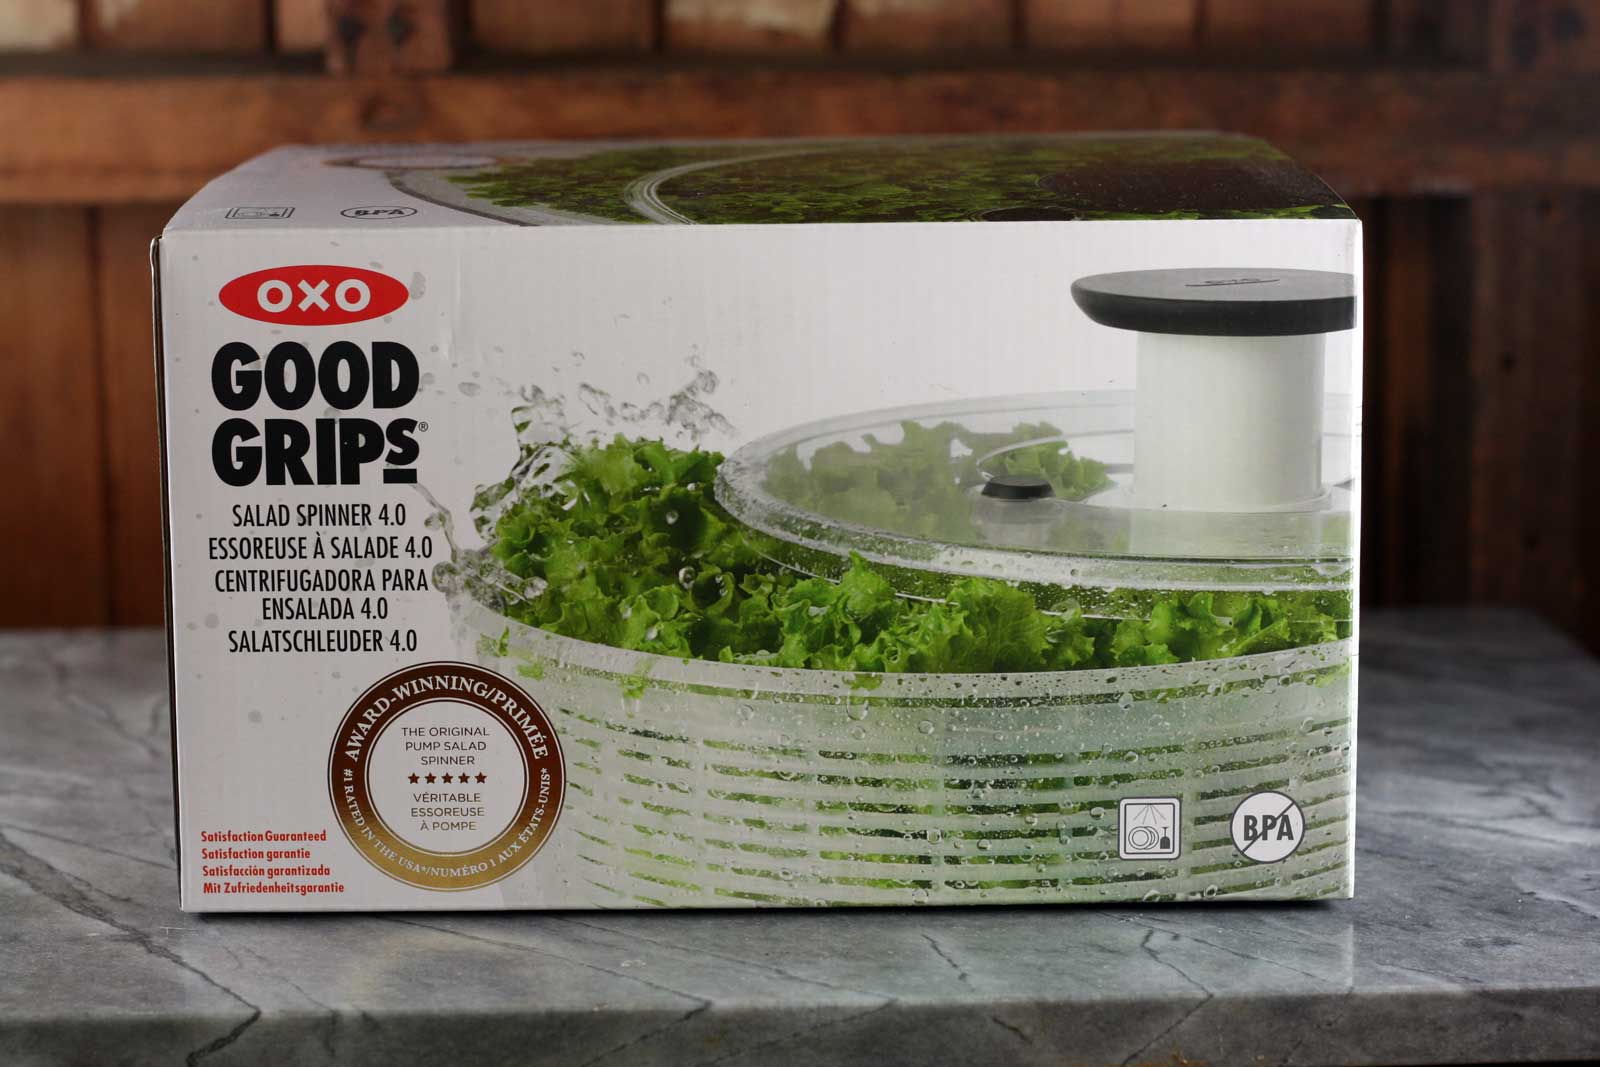 OXO Good grips salad spinner